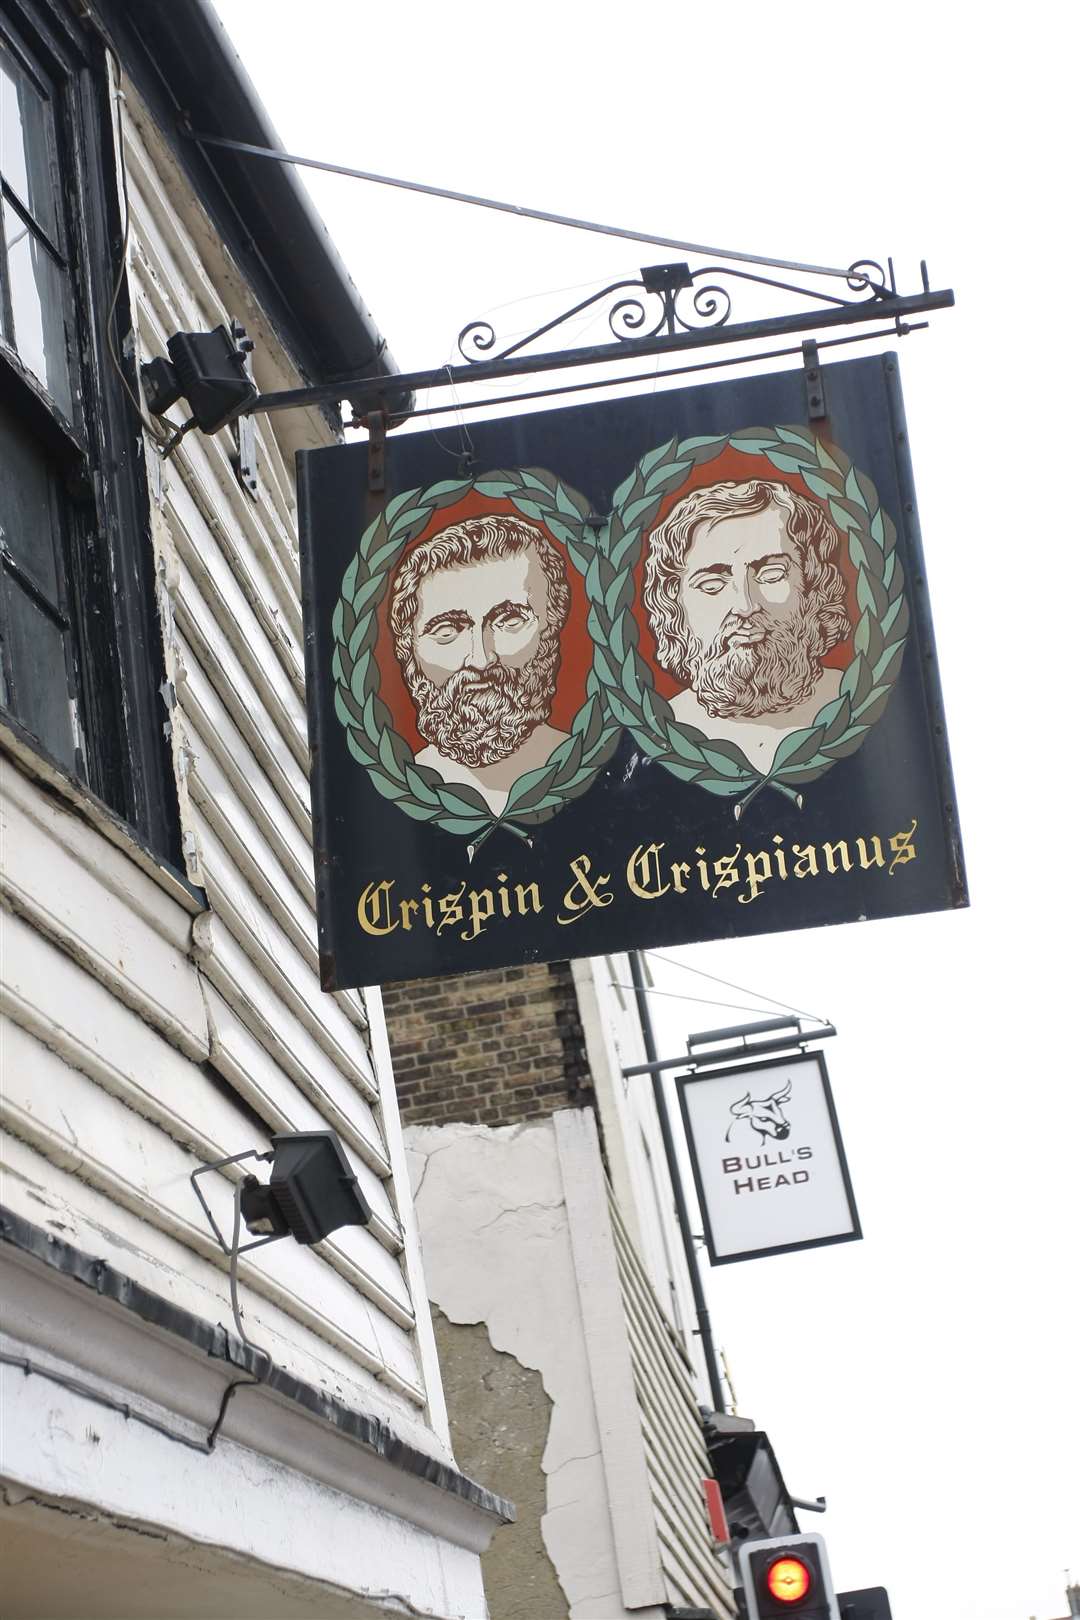 Crispin and Crispianus Pub signage in London Road, Strood